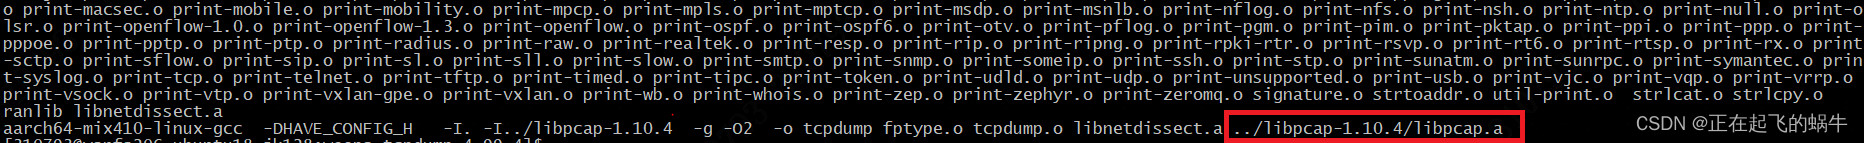 tcpdump命令抓取网络数据包并用wireshark软件分析